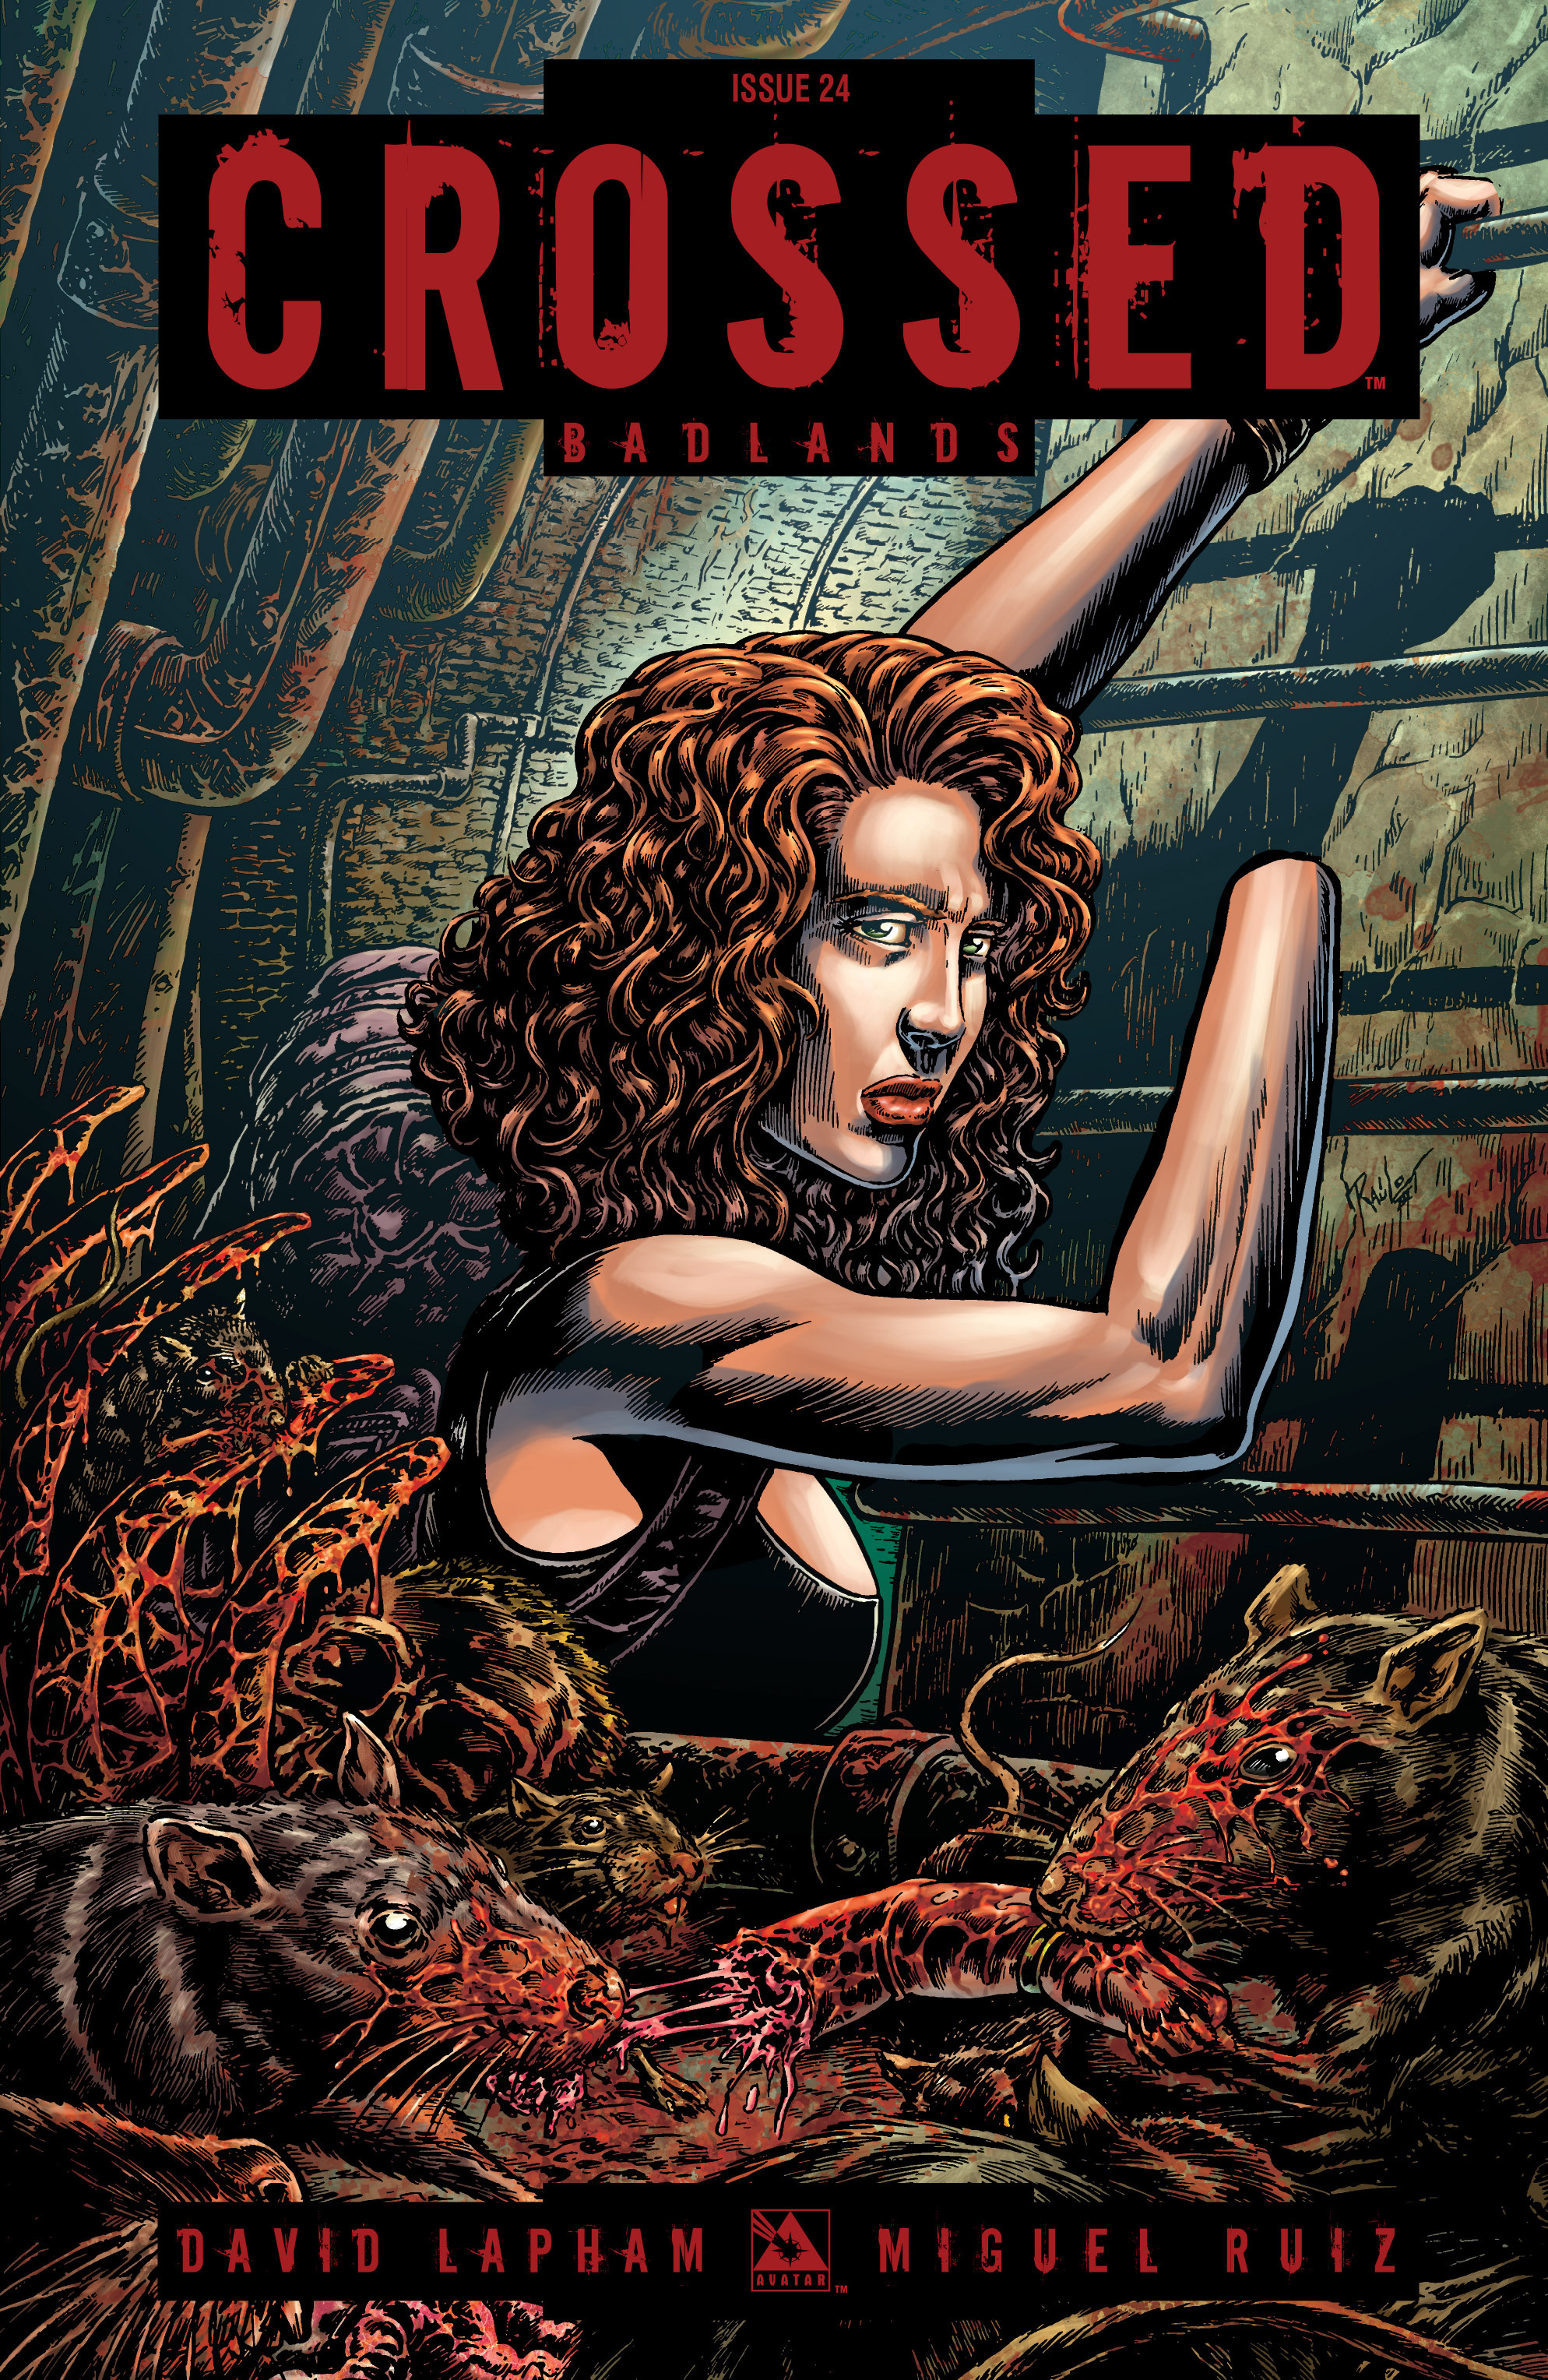 Read online Crossed: Badlands comic -  Issue #24 - 1